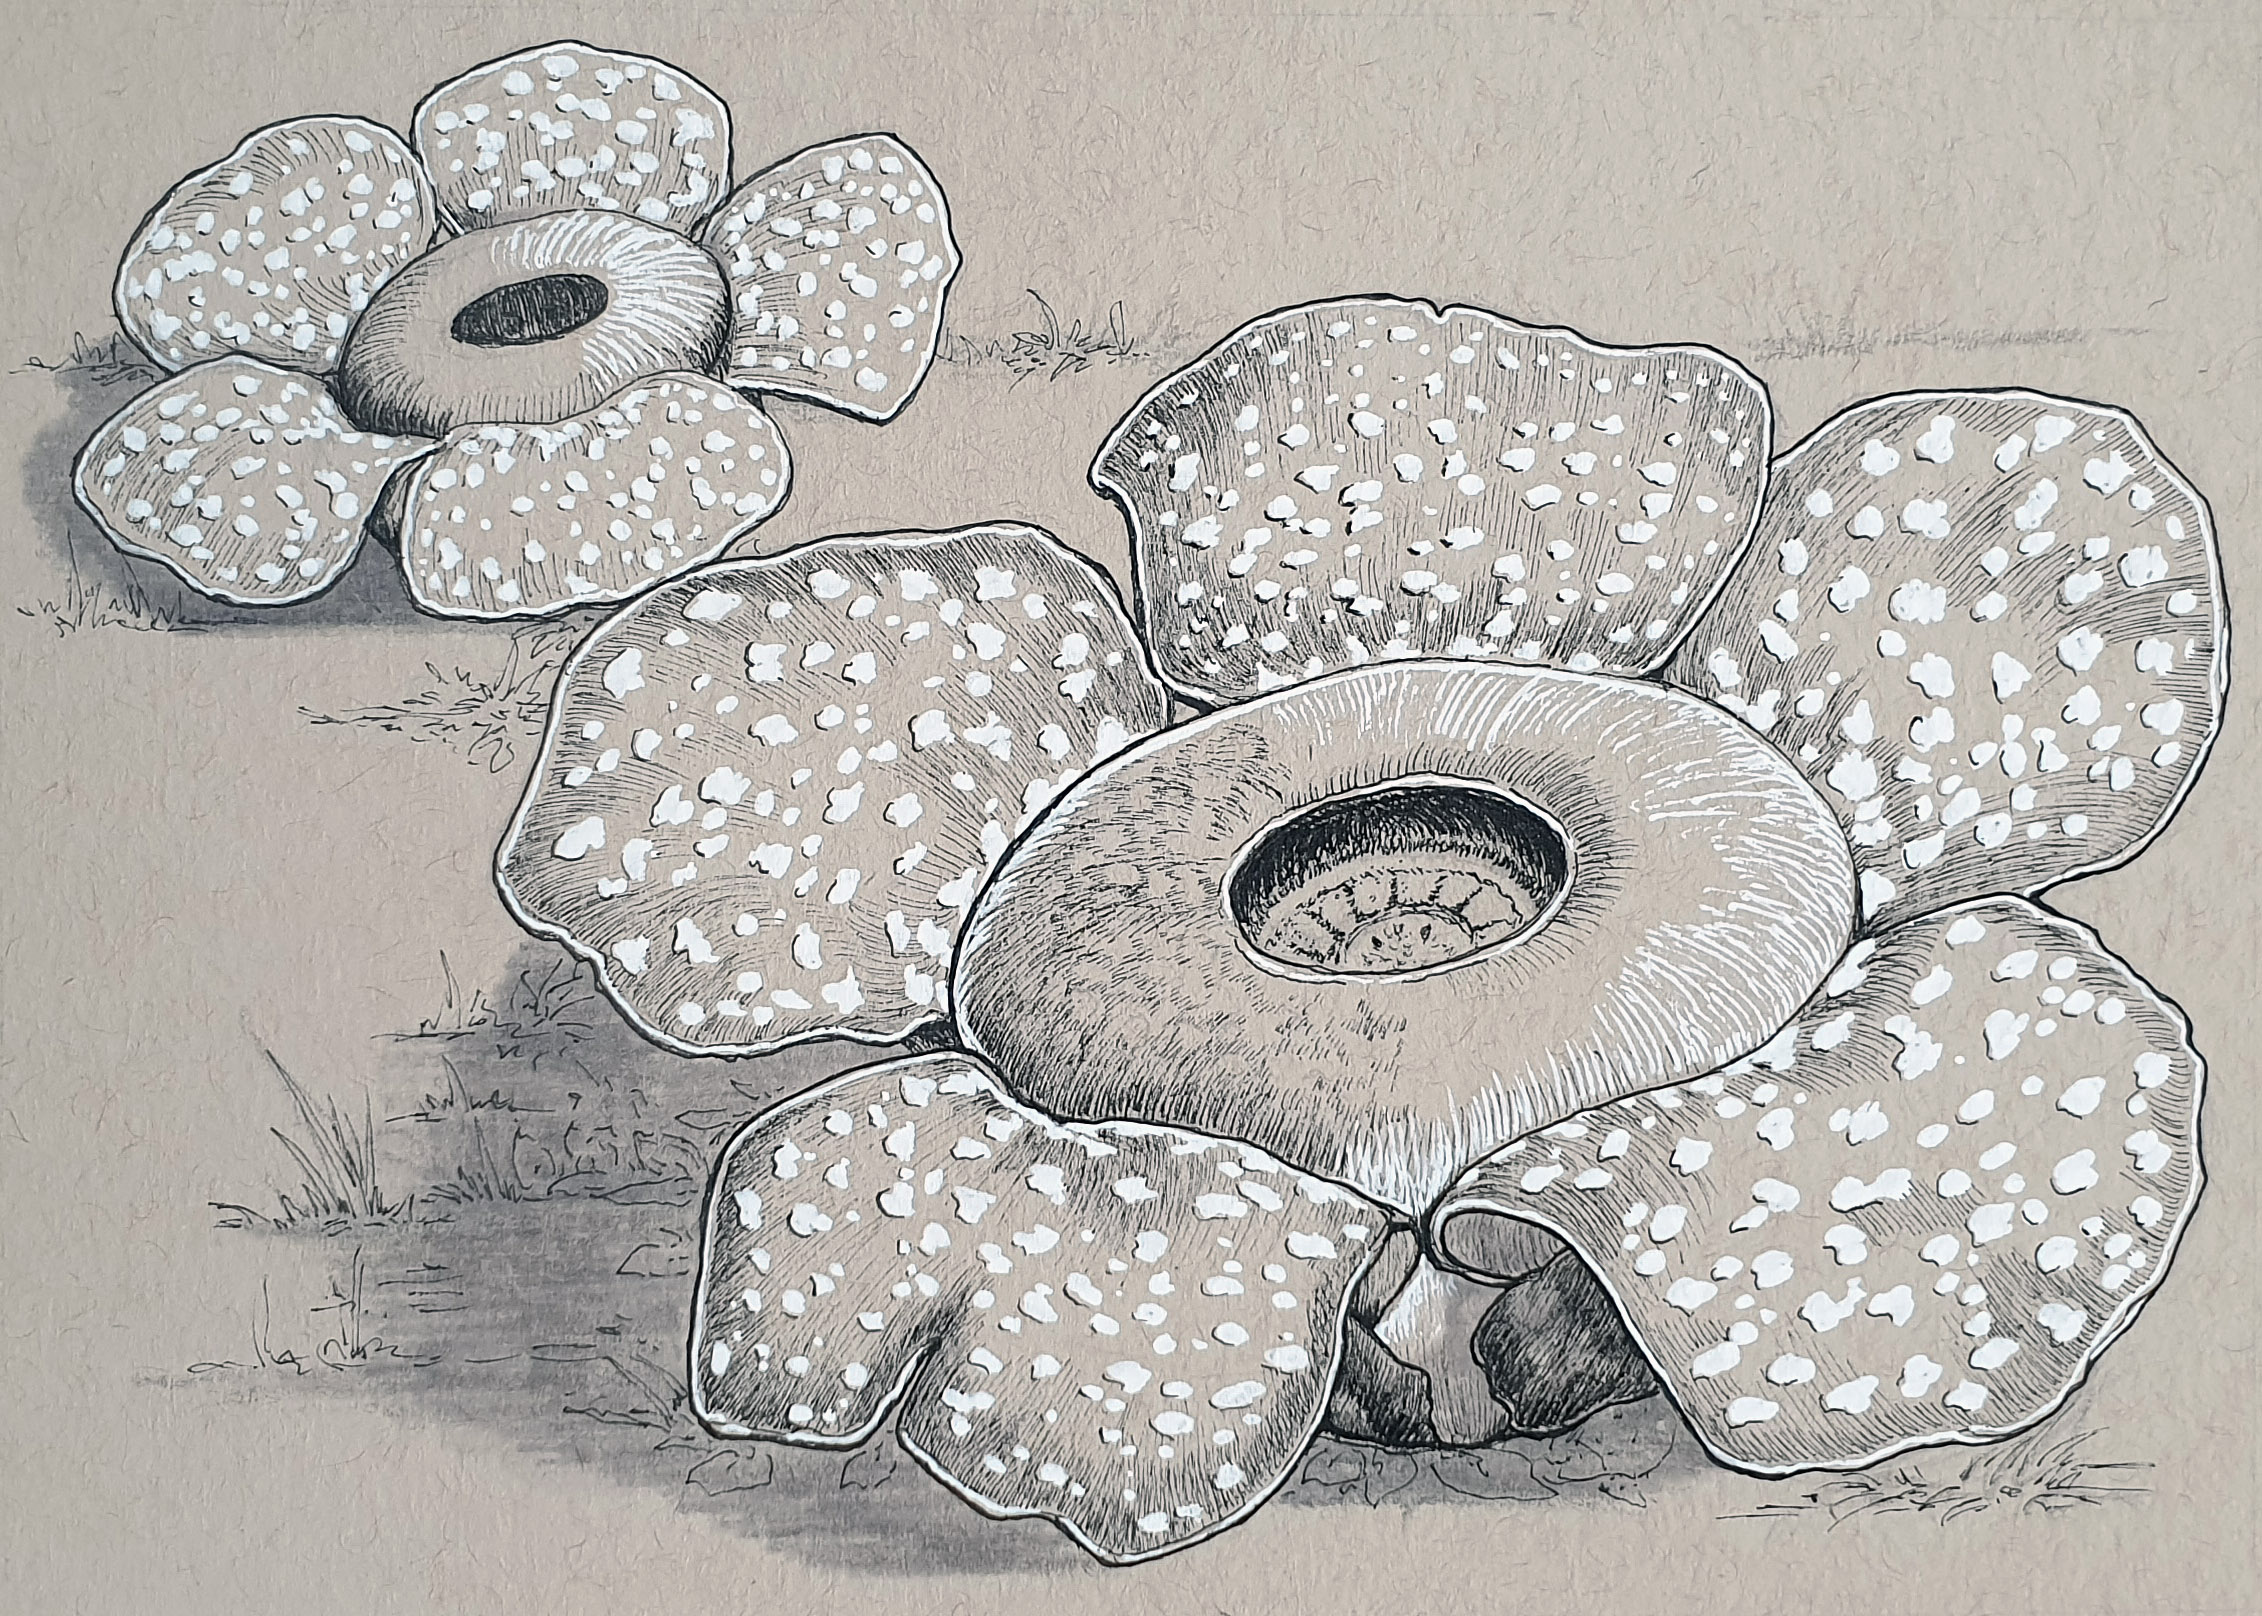 Day 23: Rafflesia